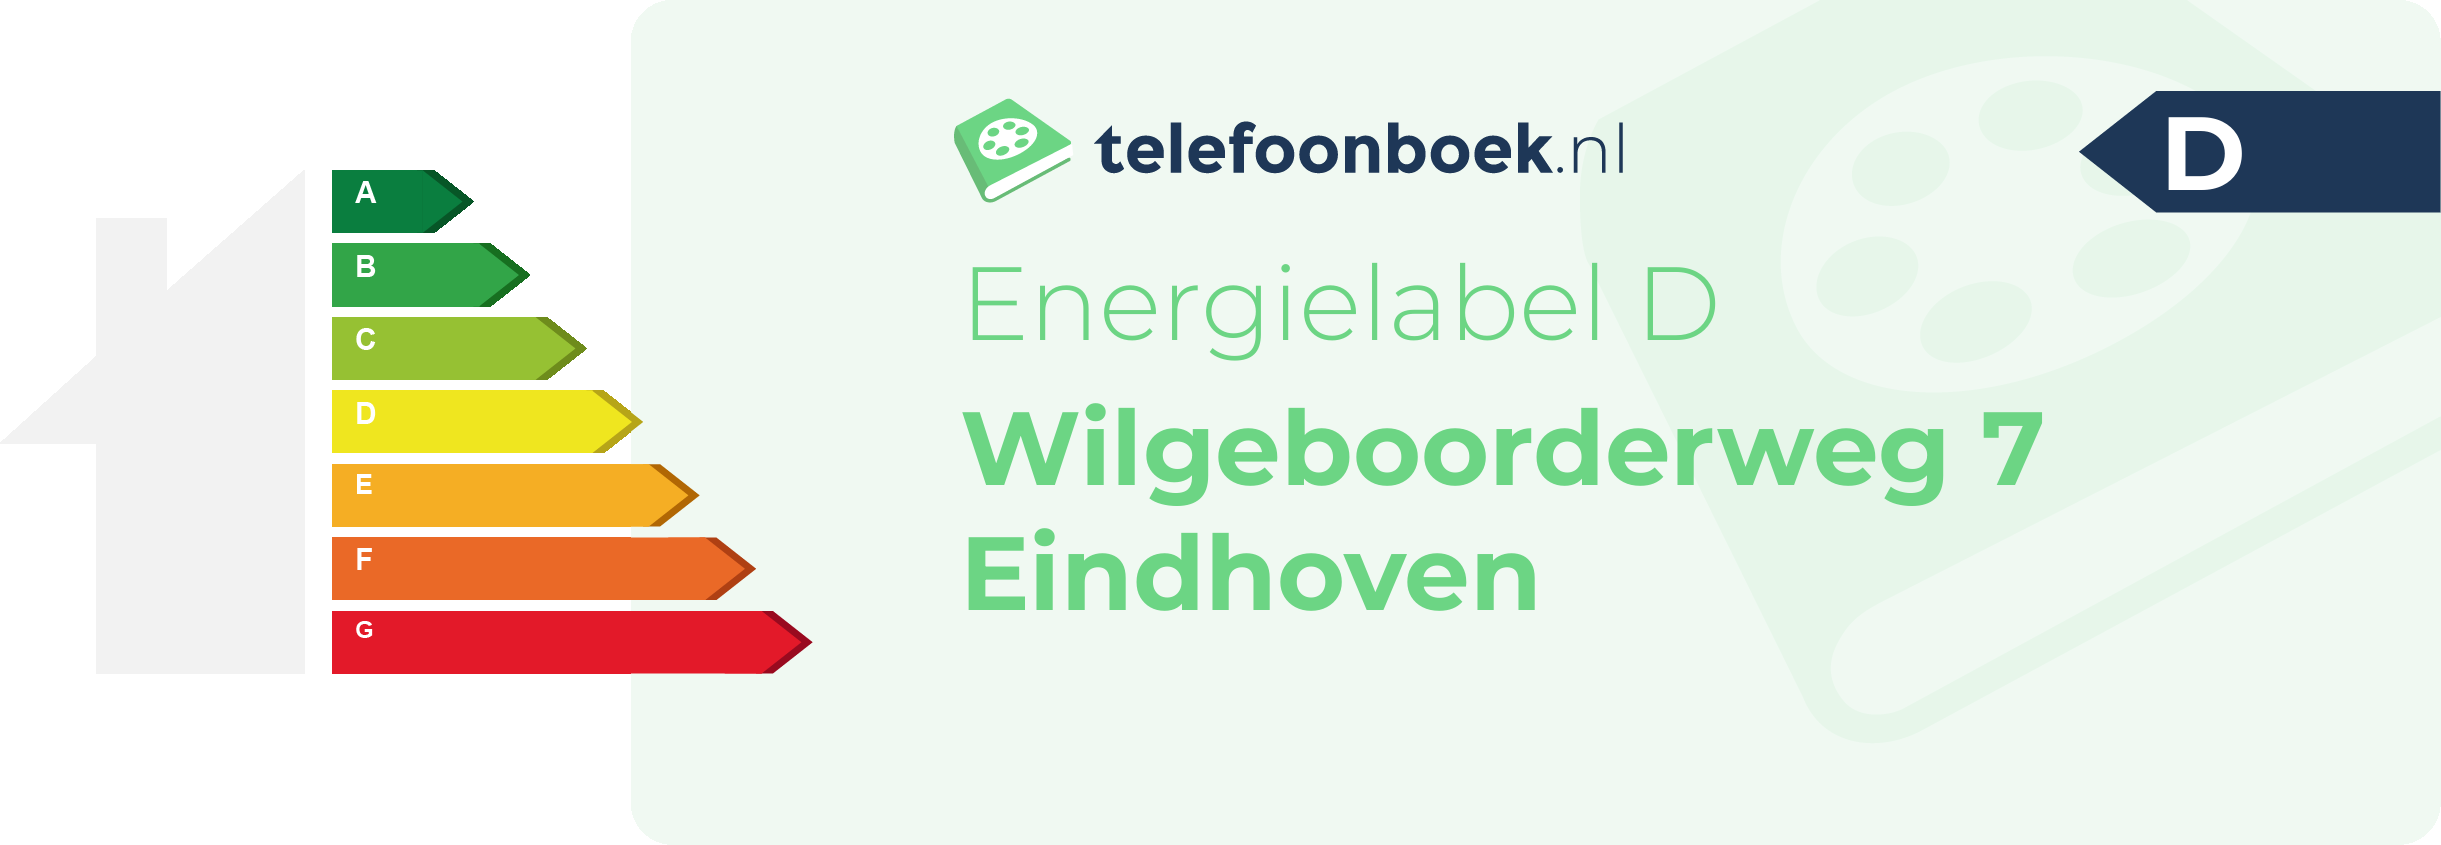 Energielabel Wilgeboorderweg 7 Eindhoven